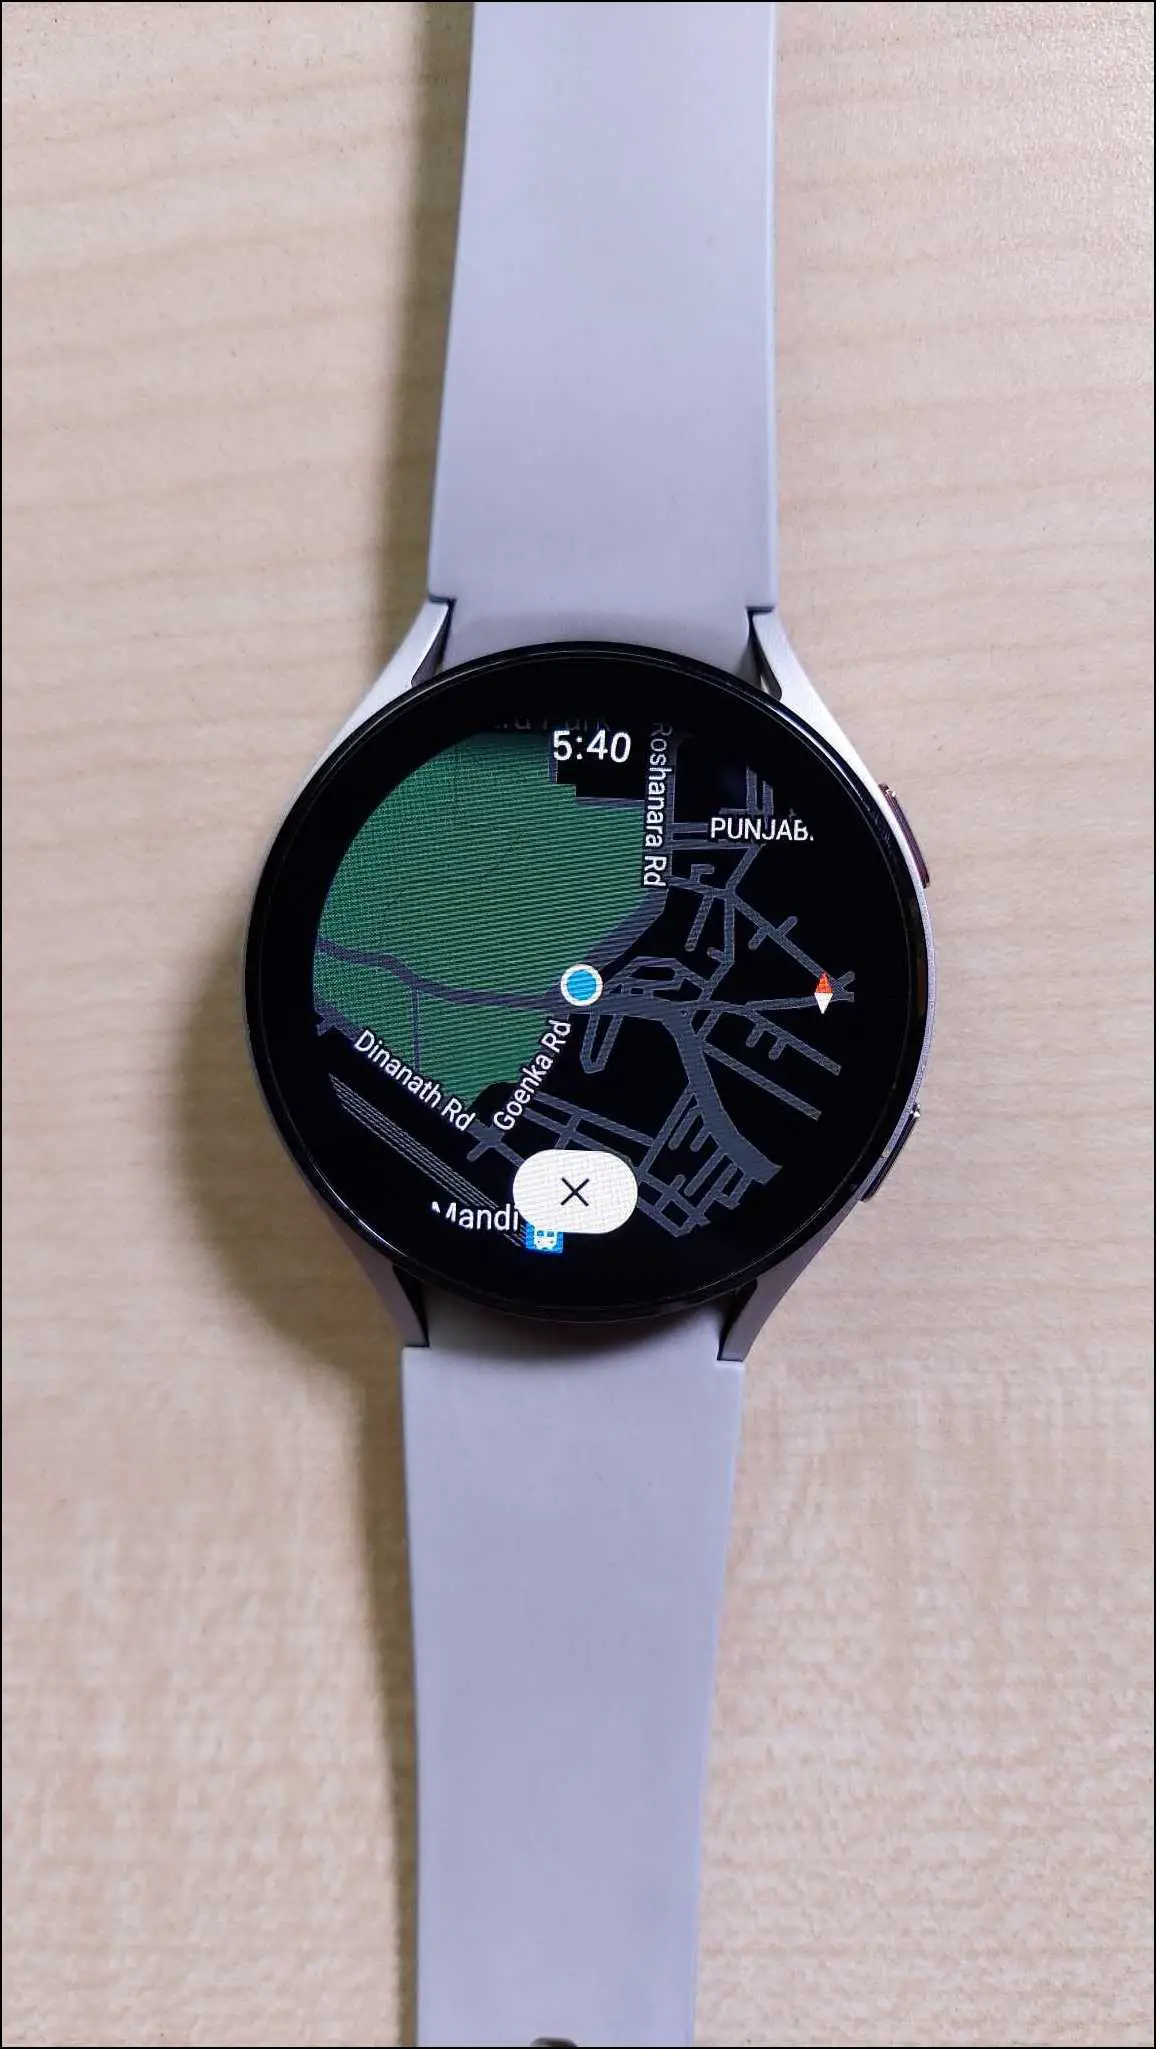 Google Maps GPS Navigation on Wear OS